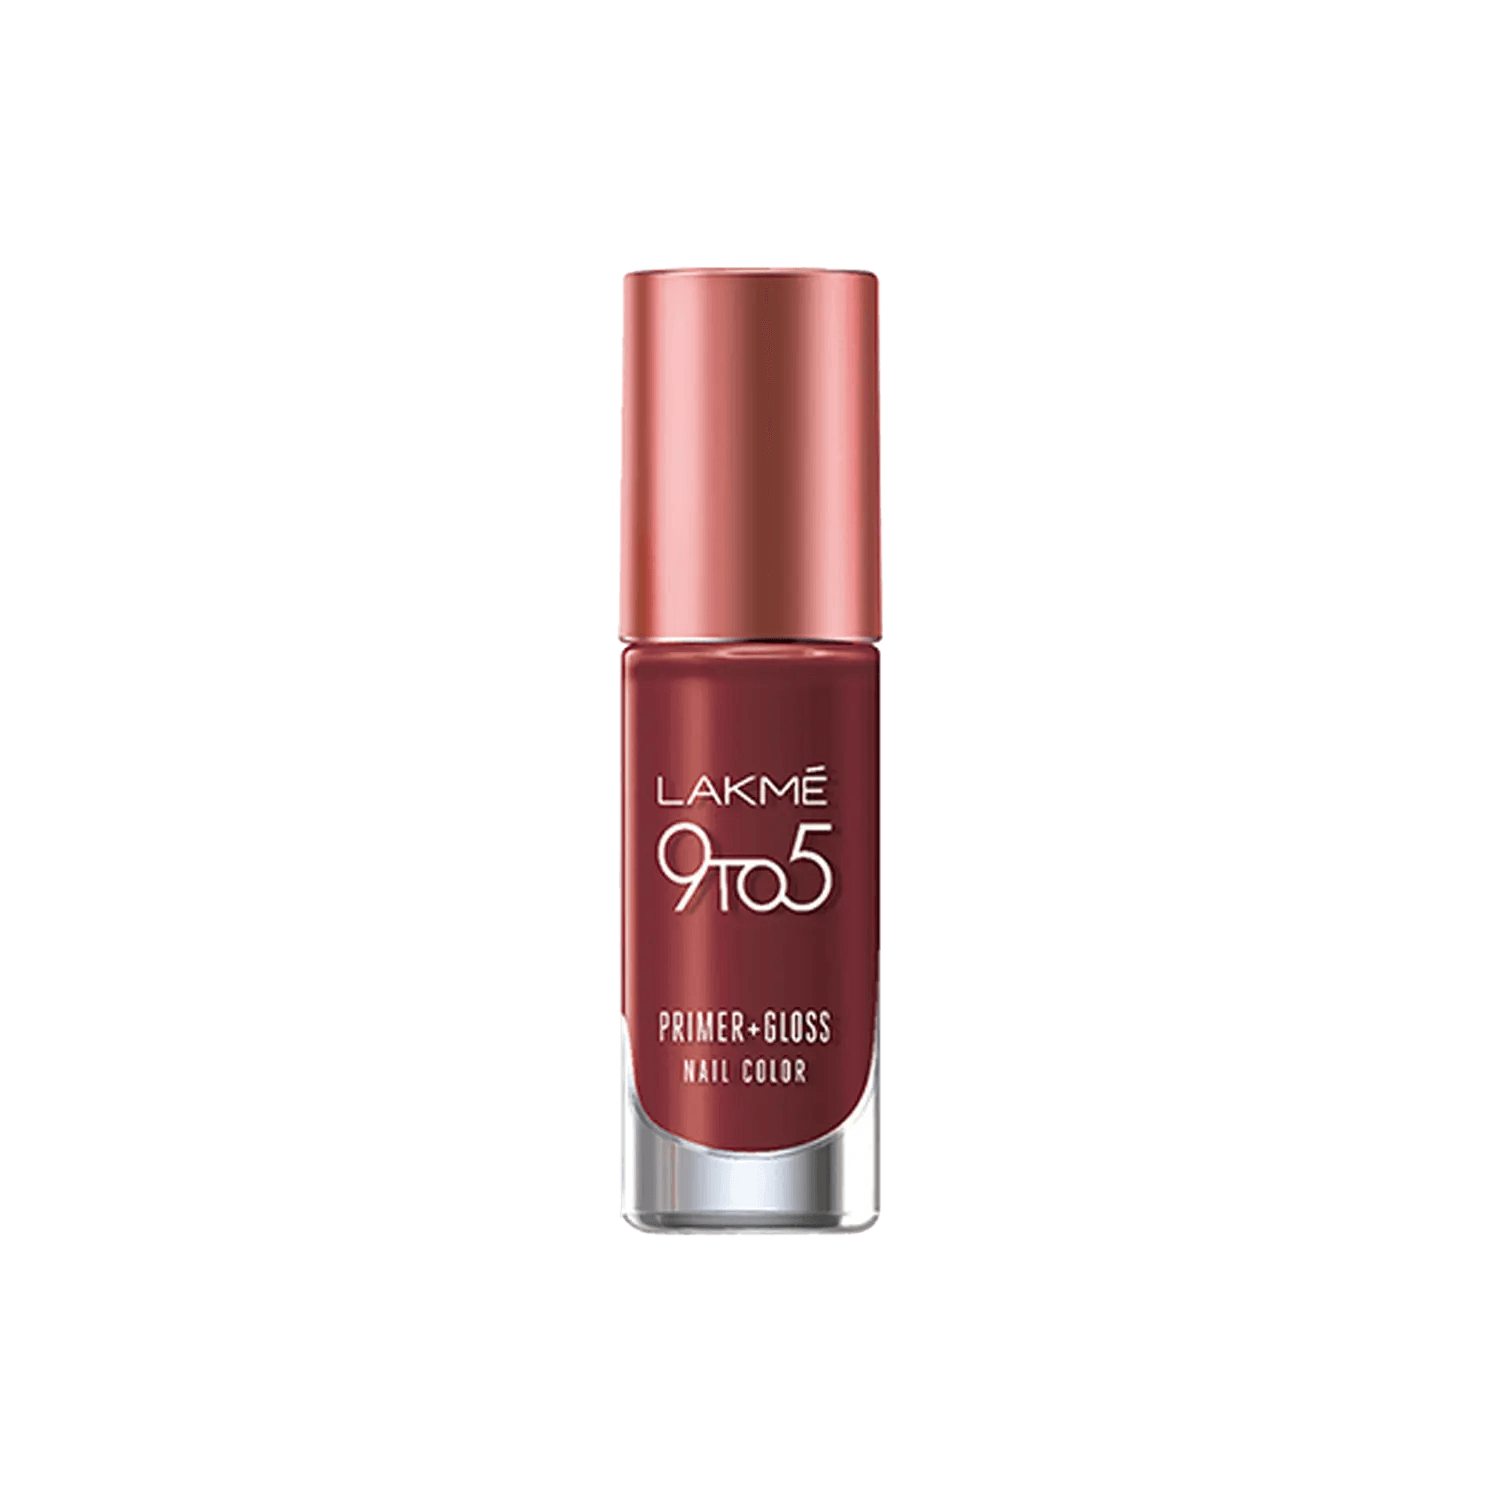 Lakme | Lakme 9To5 Primer + Gloss Nail Color - Red Alert (6ml)